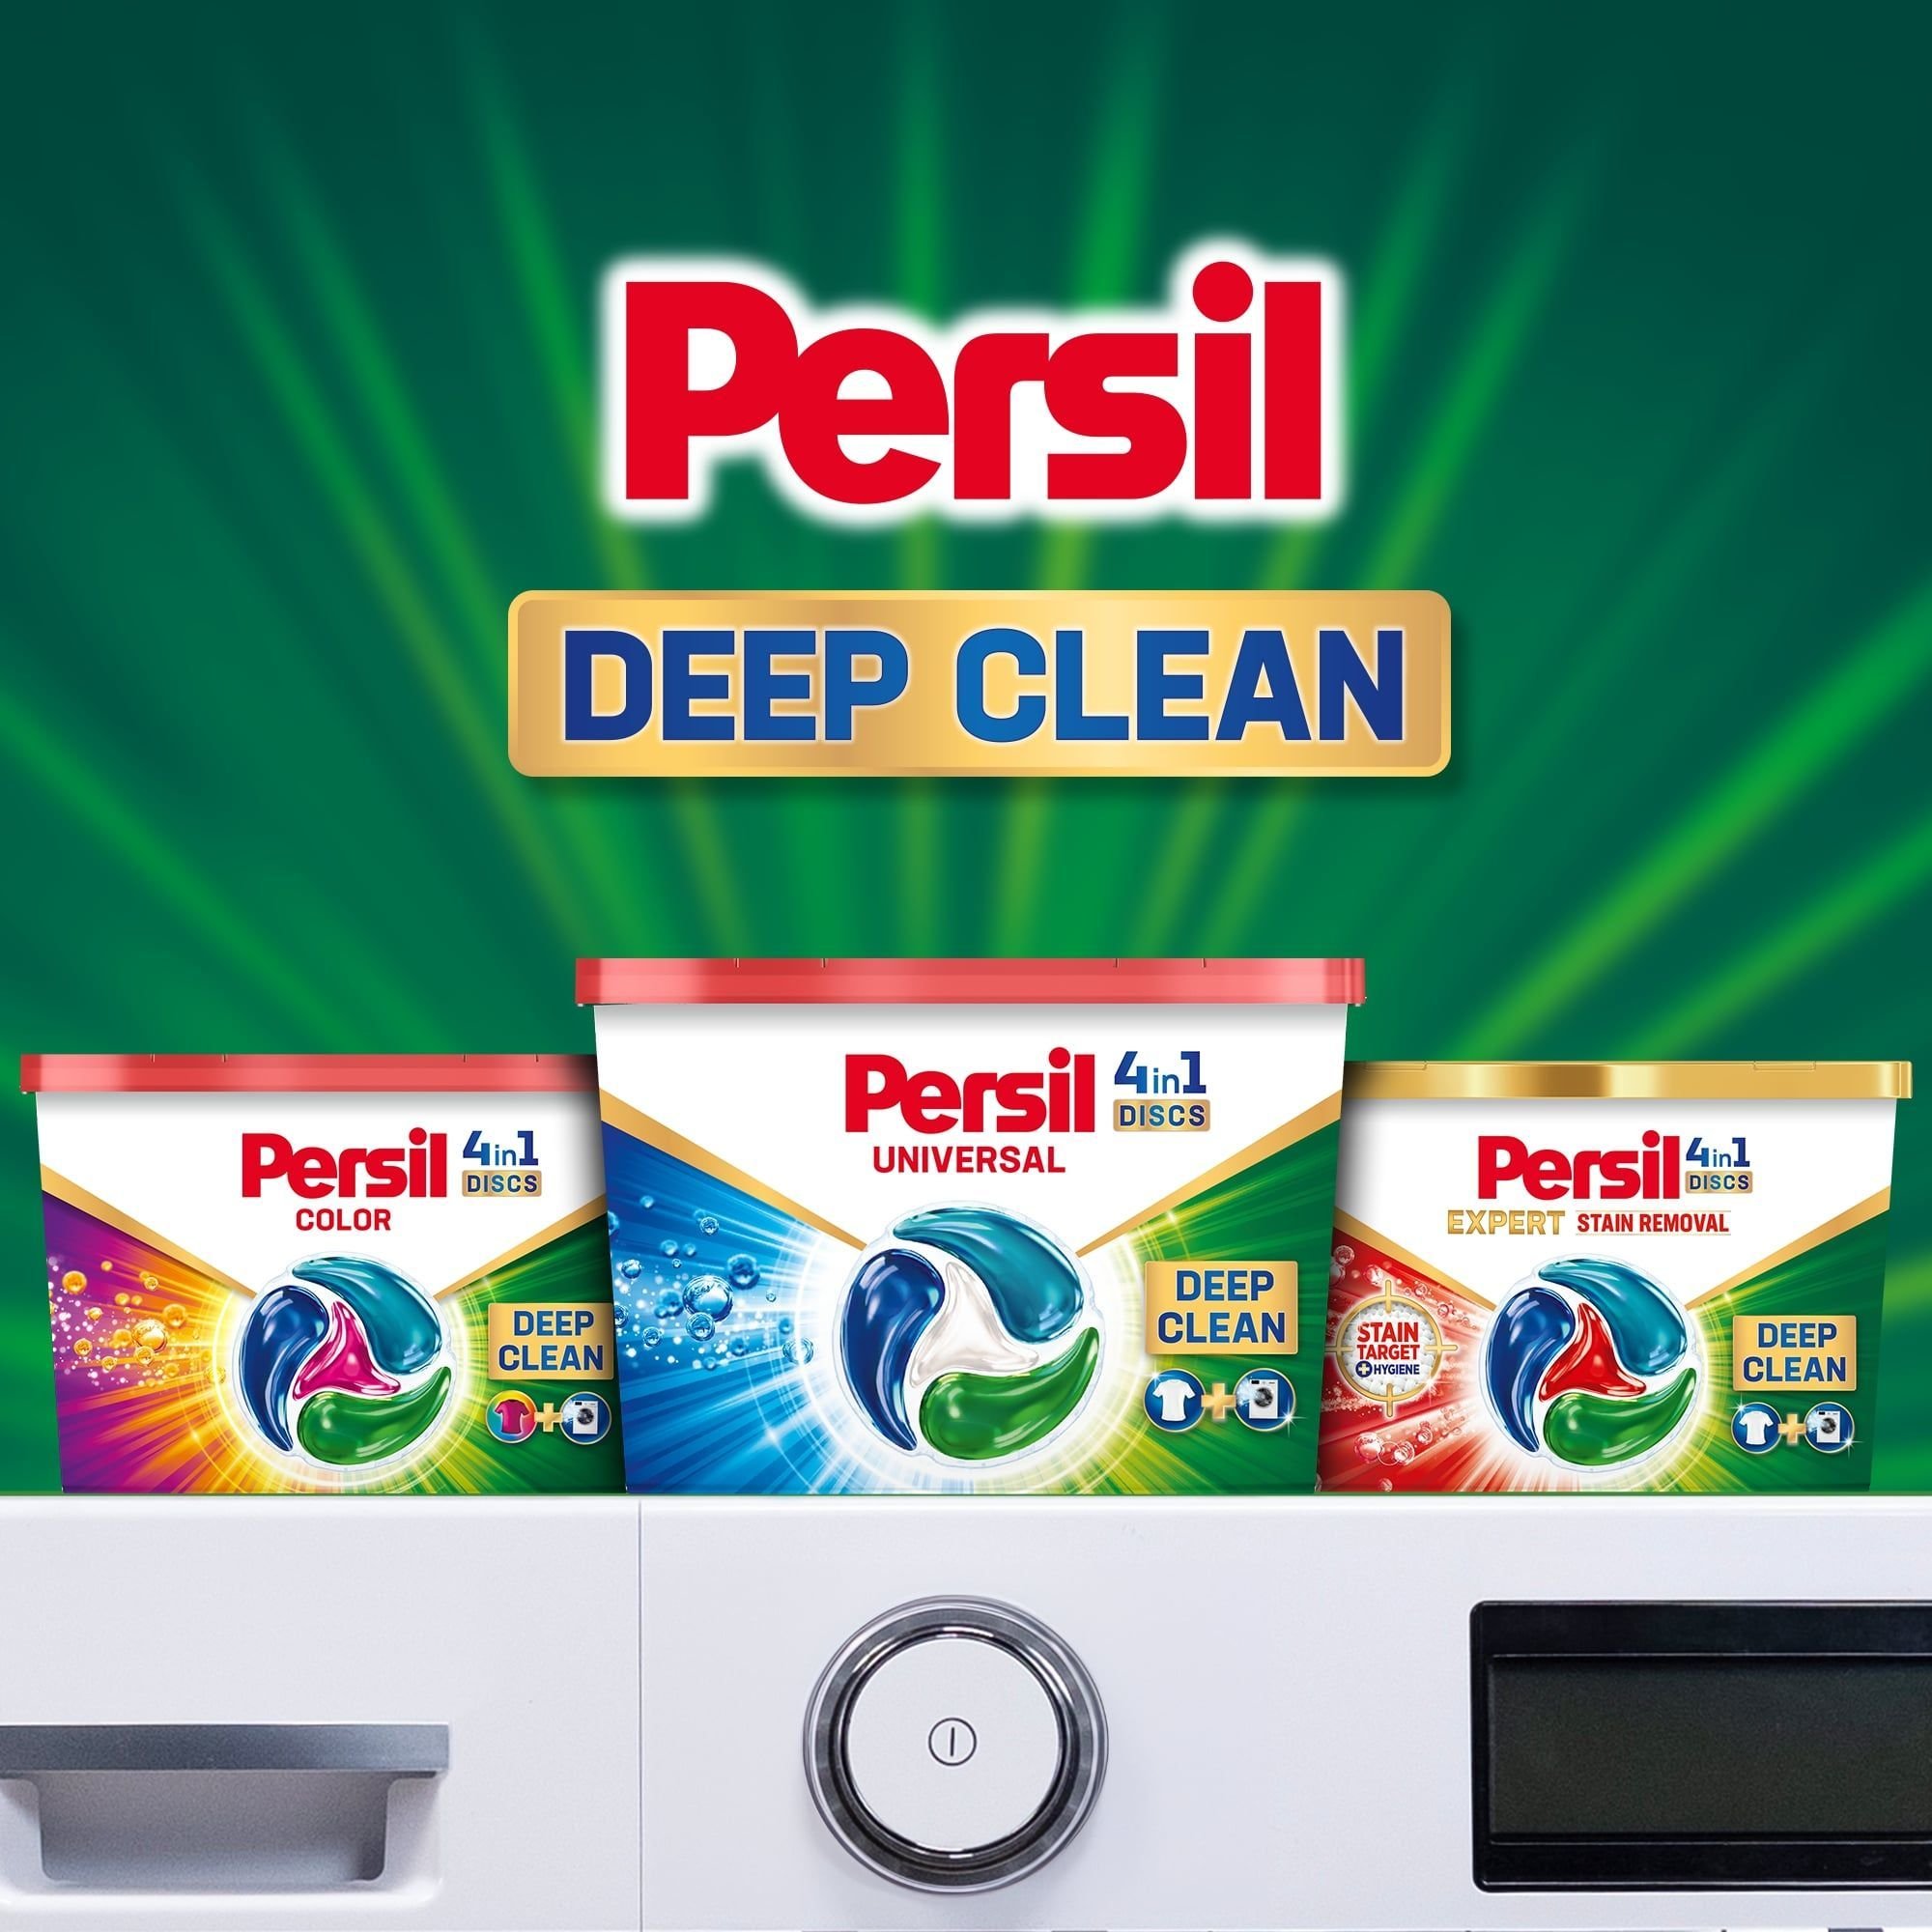 Диски для стирки Persil Deep Cleen Universal 4 in 1 Discs 26 шт. - фото 6